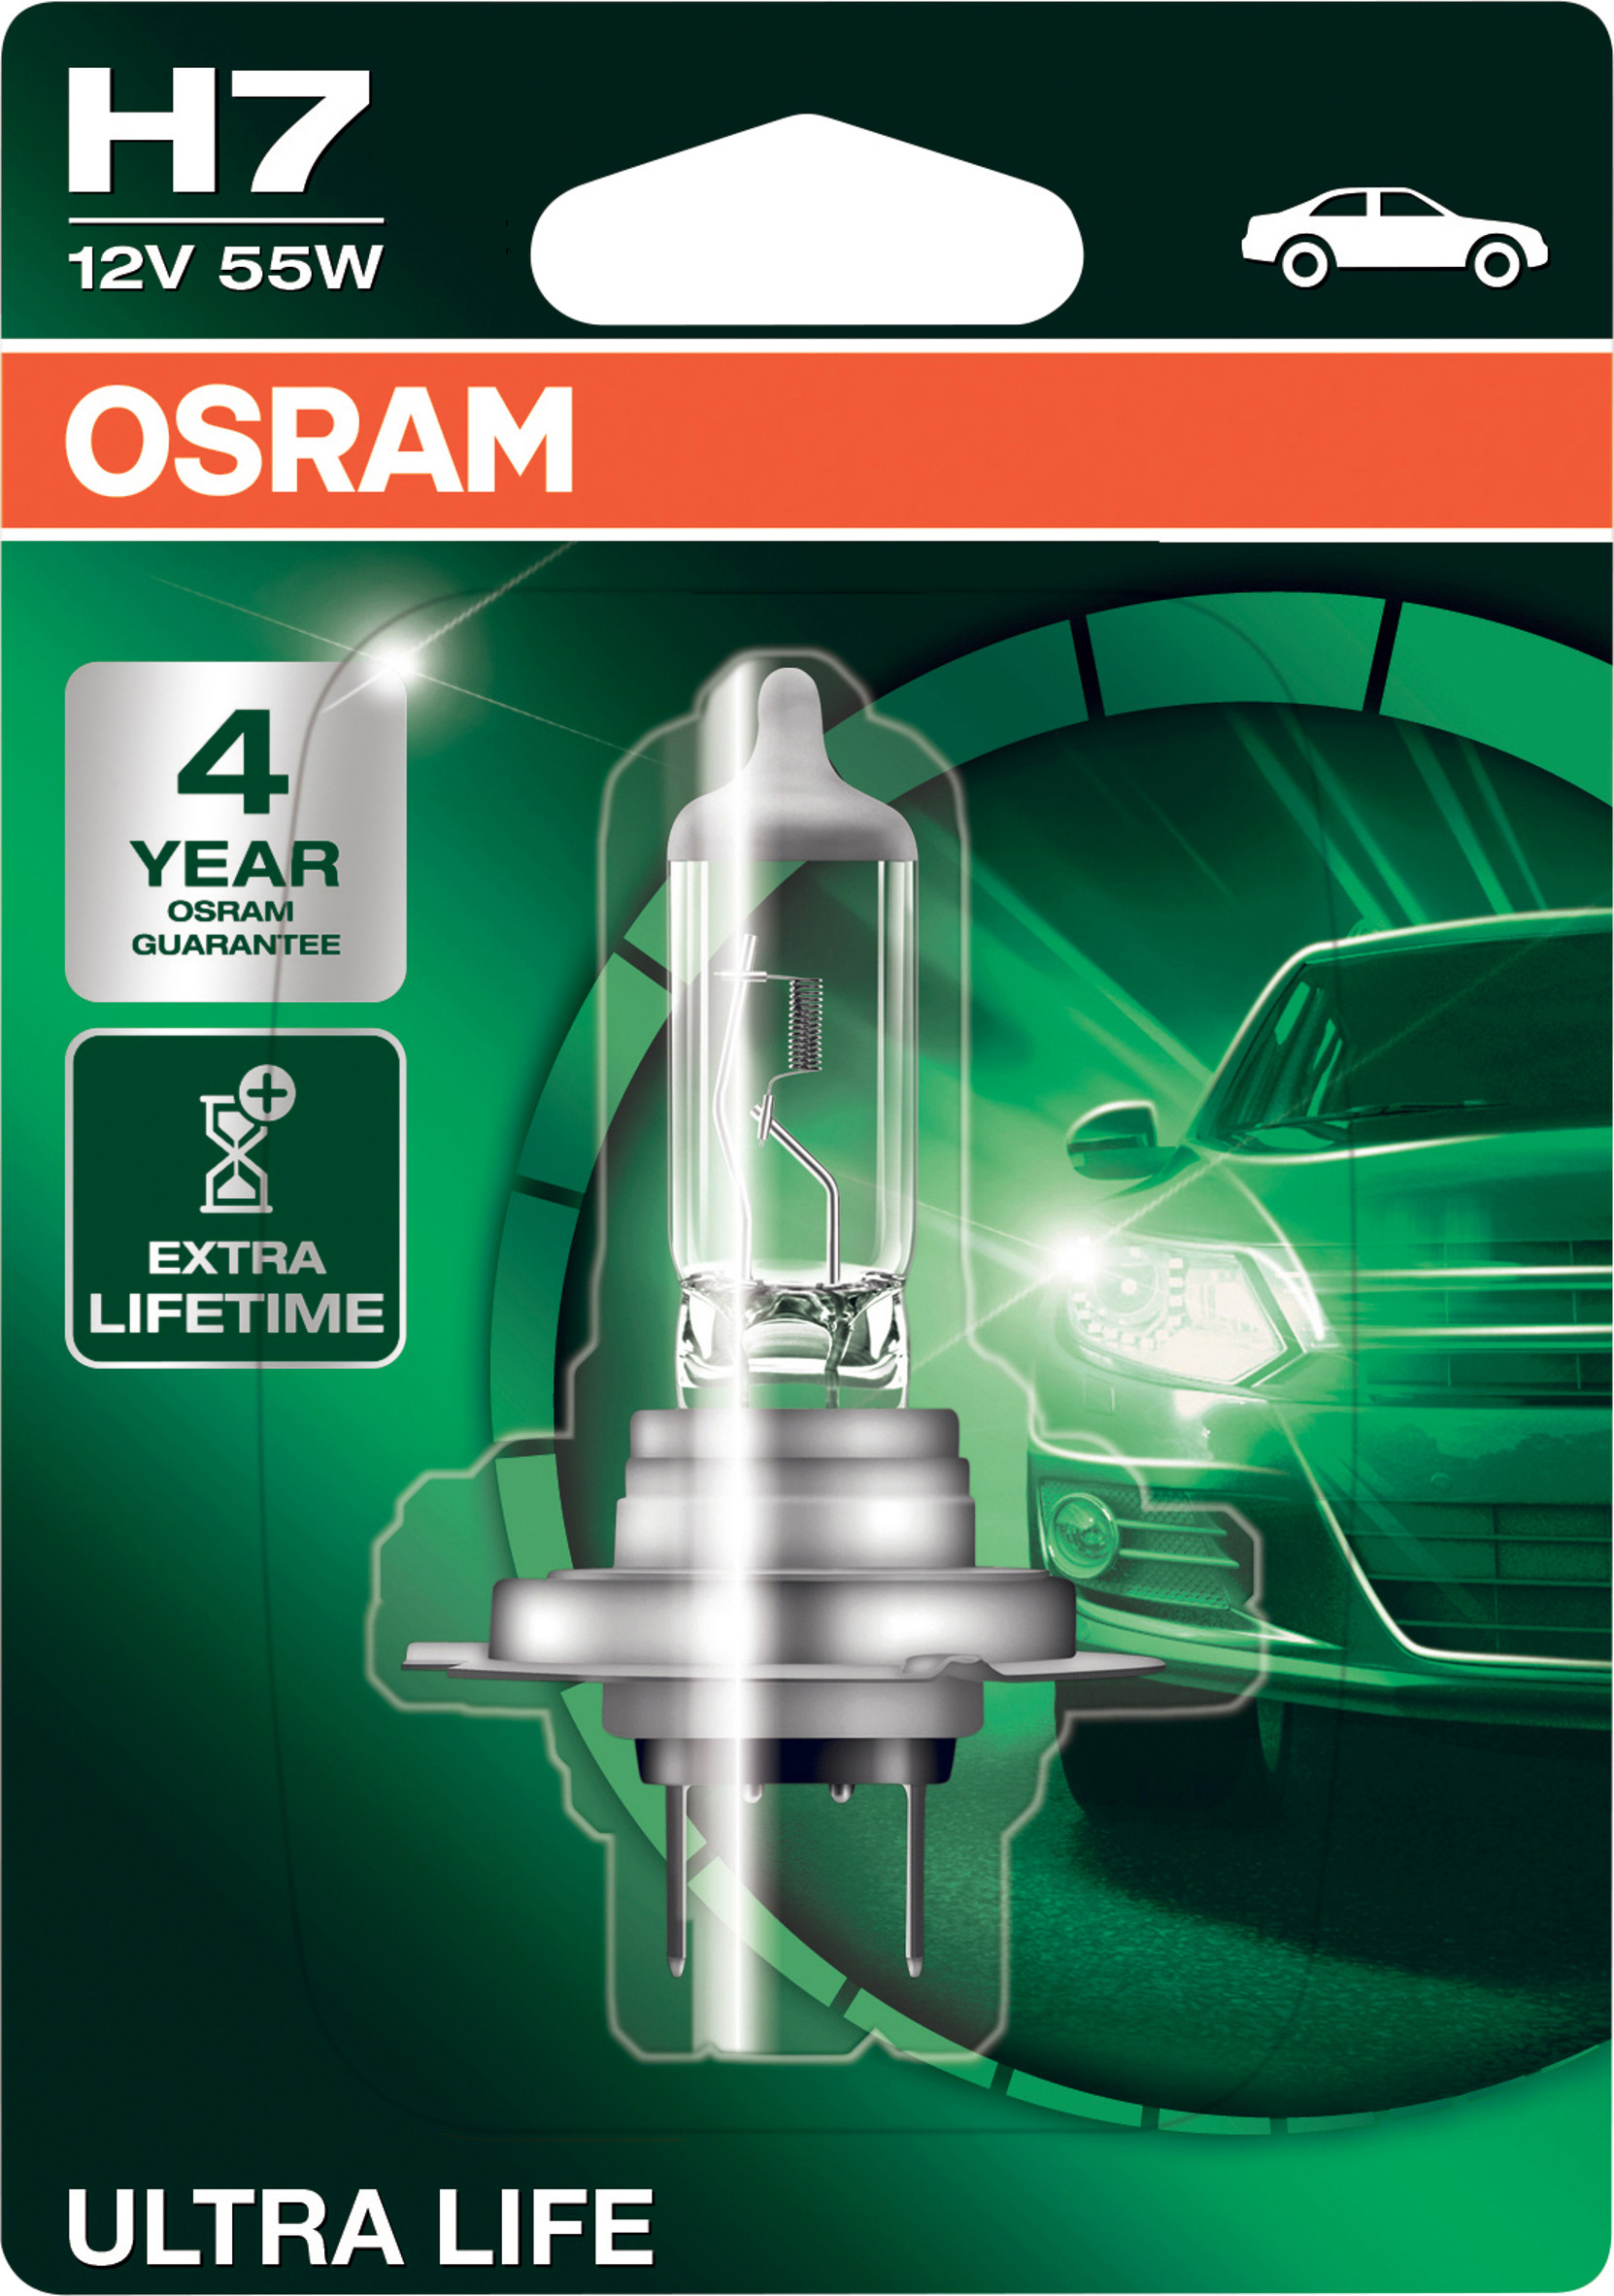 OSRAM H7 ULTRA LIFE H7-12V-55W-PX26d